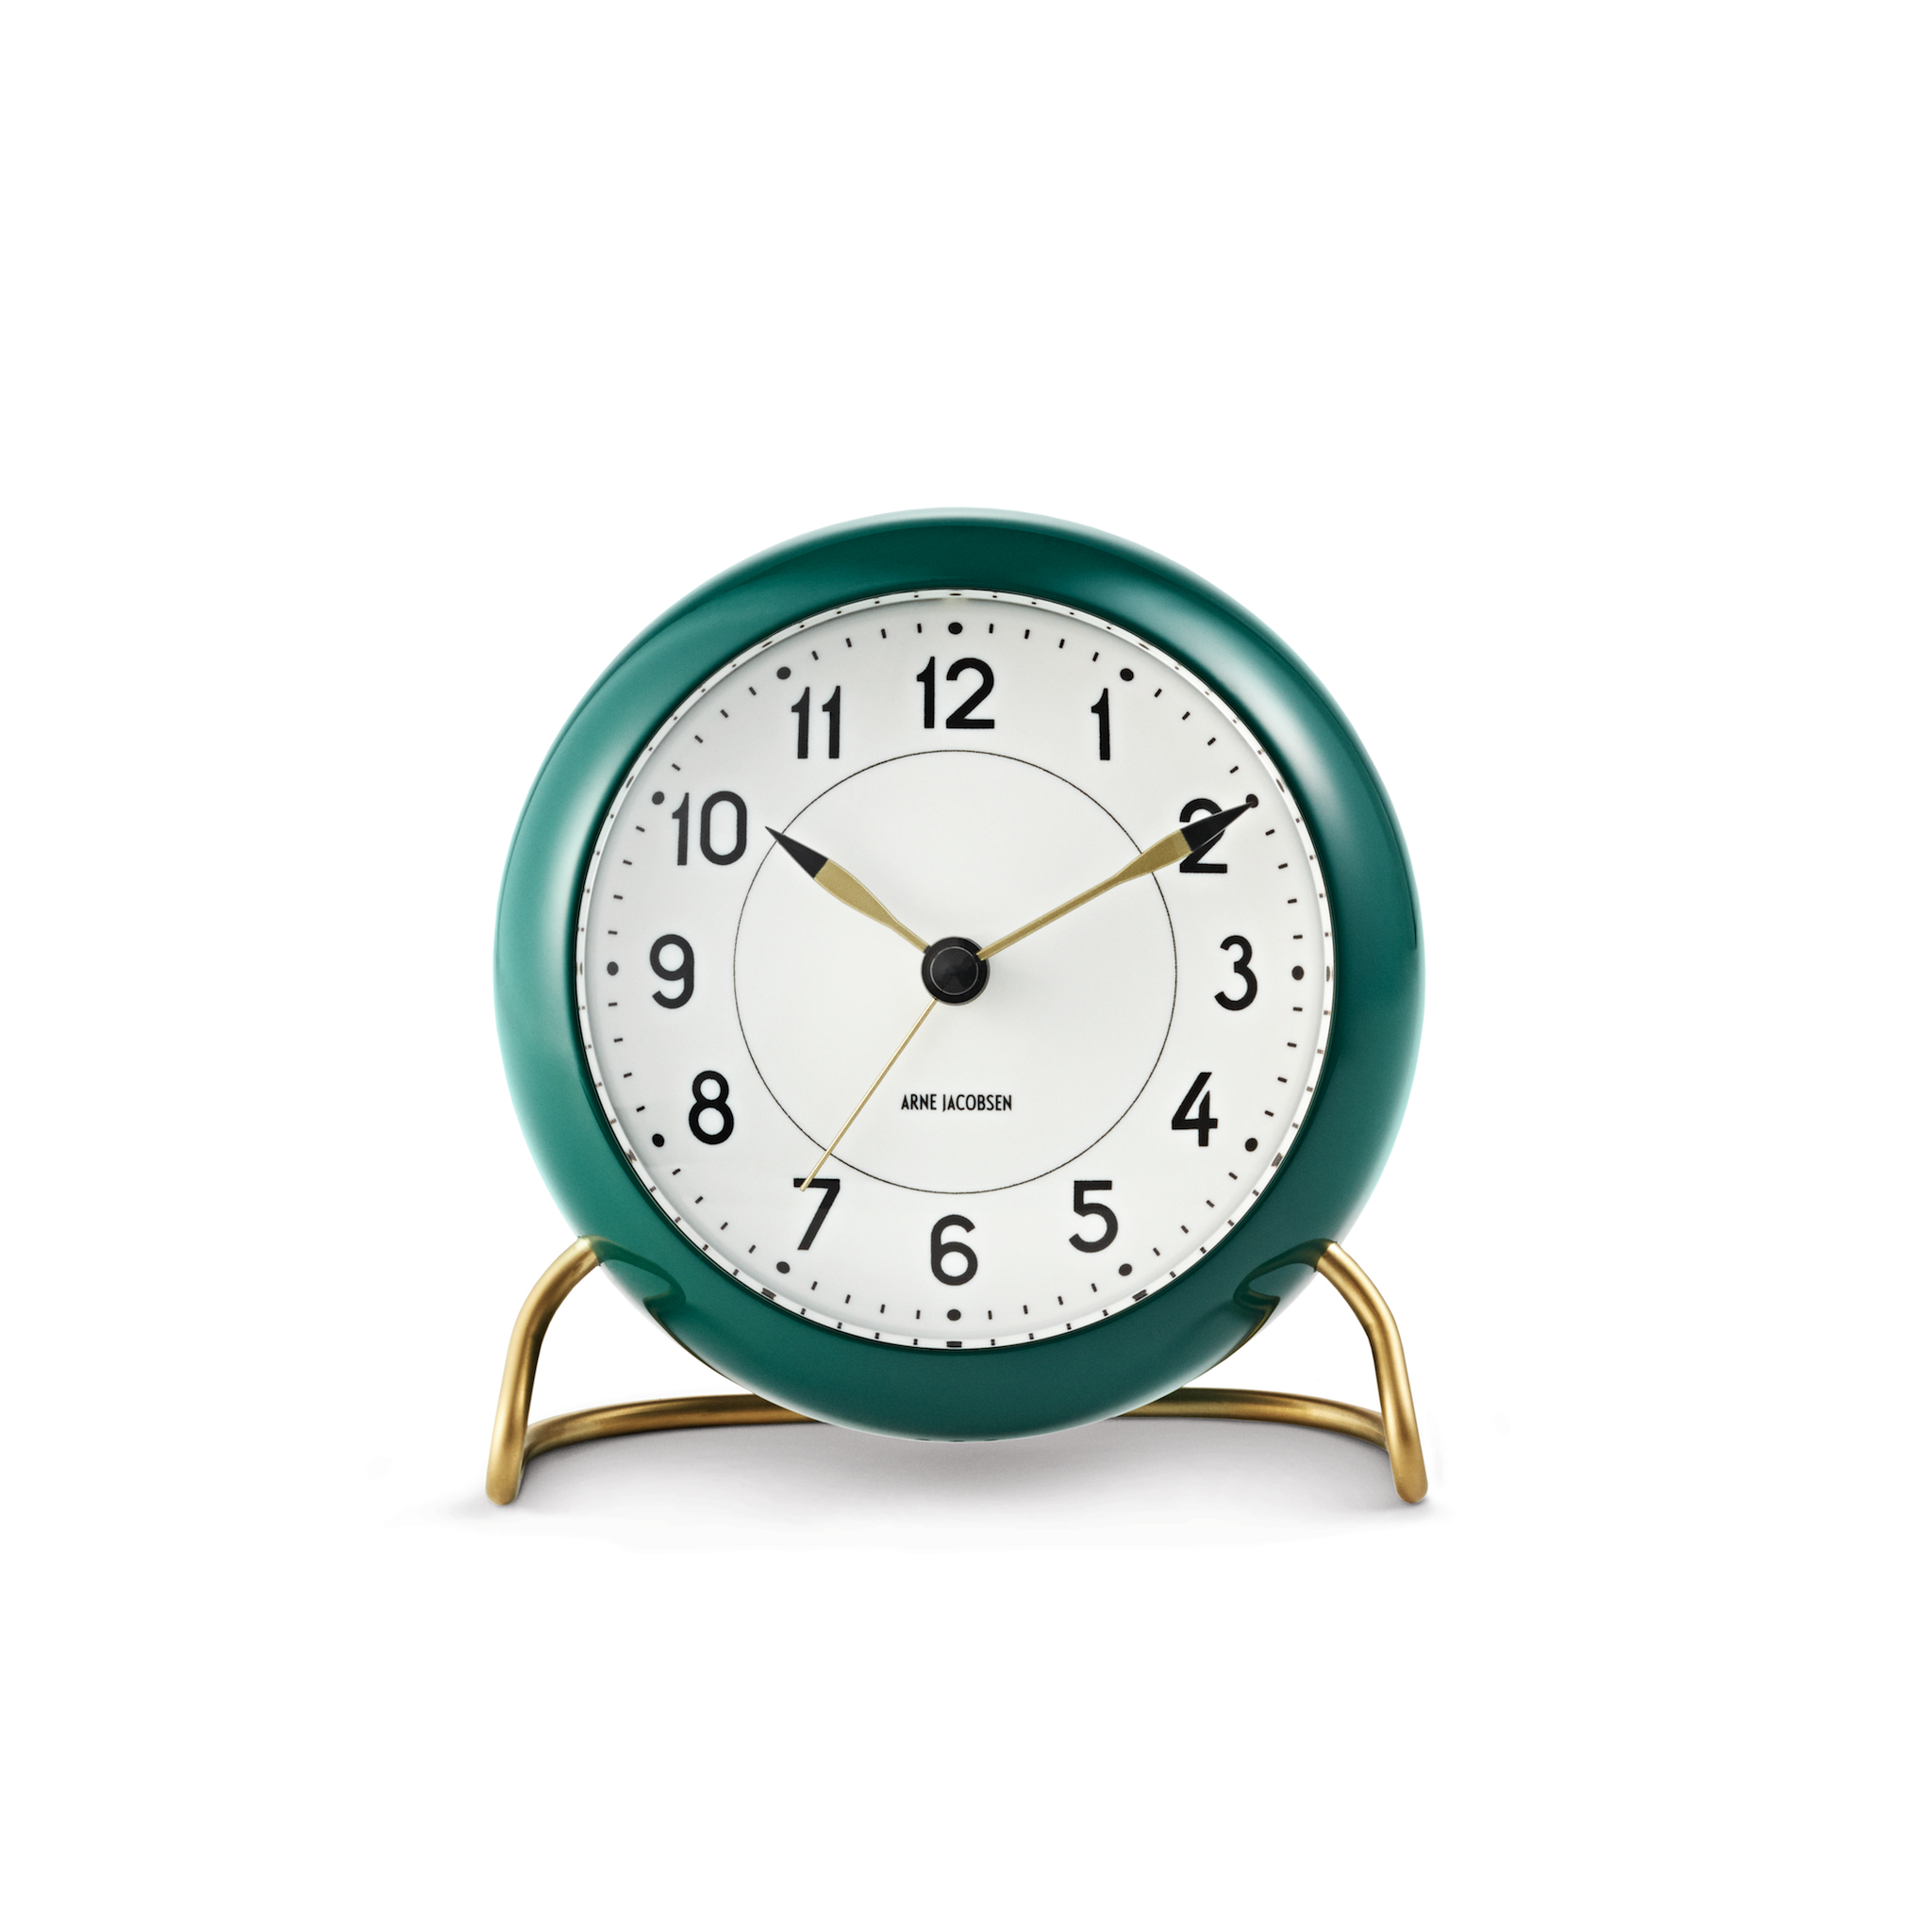 Arne Jacobsen Station Alarm Clock, Green